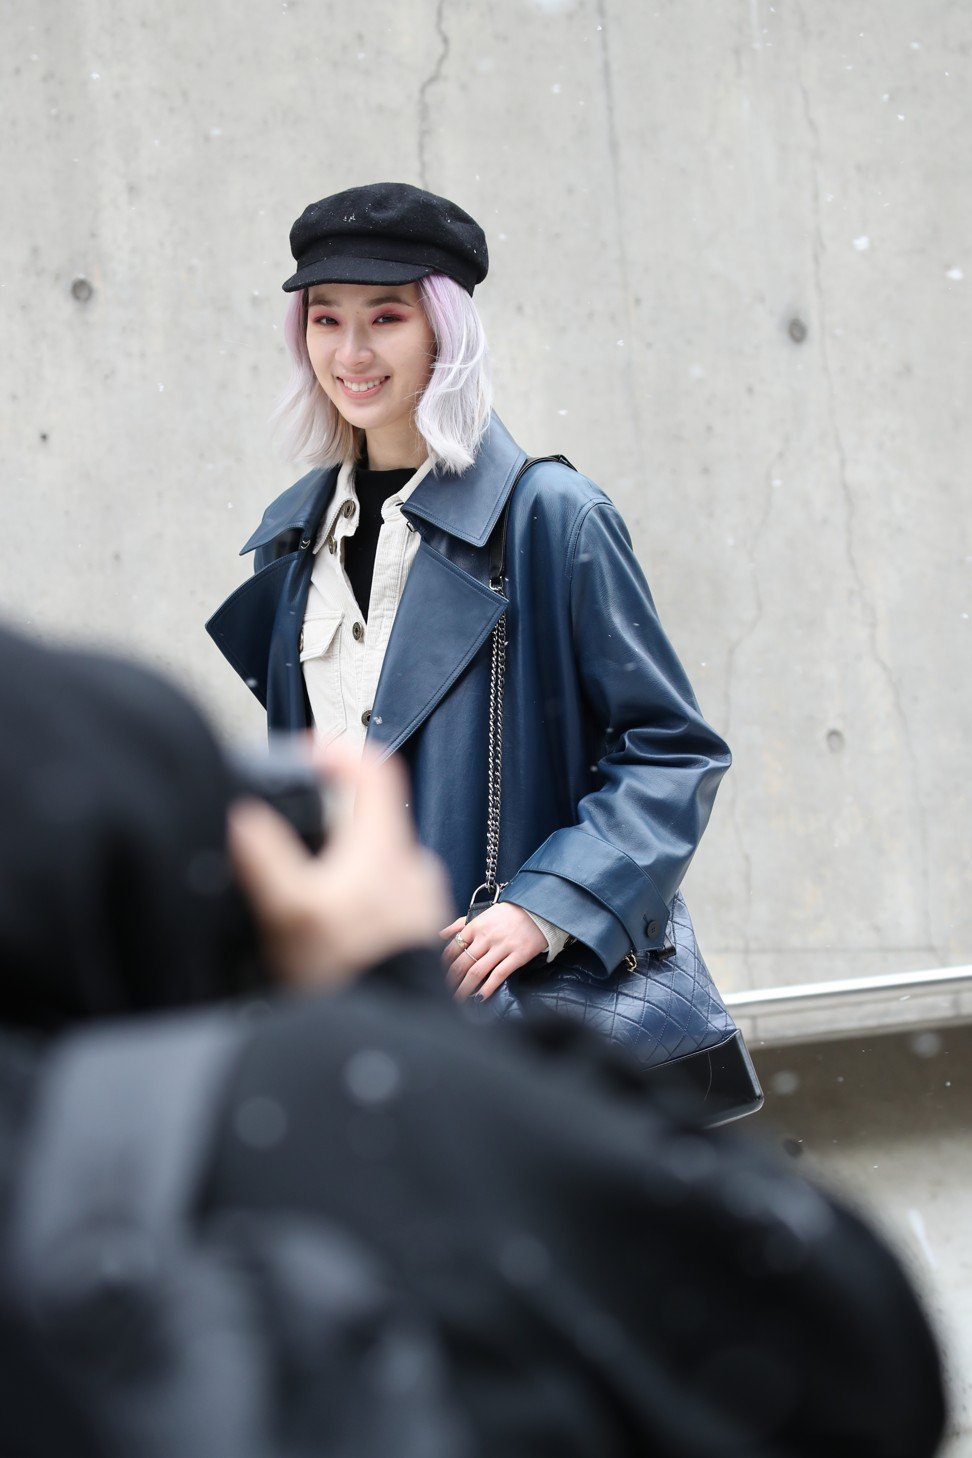 Sora Choi - Modeling Career and Personal Life - Fashion Republic Magazine